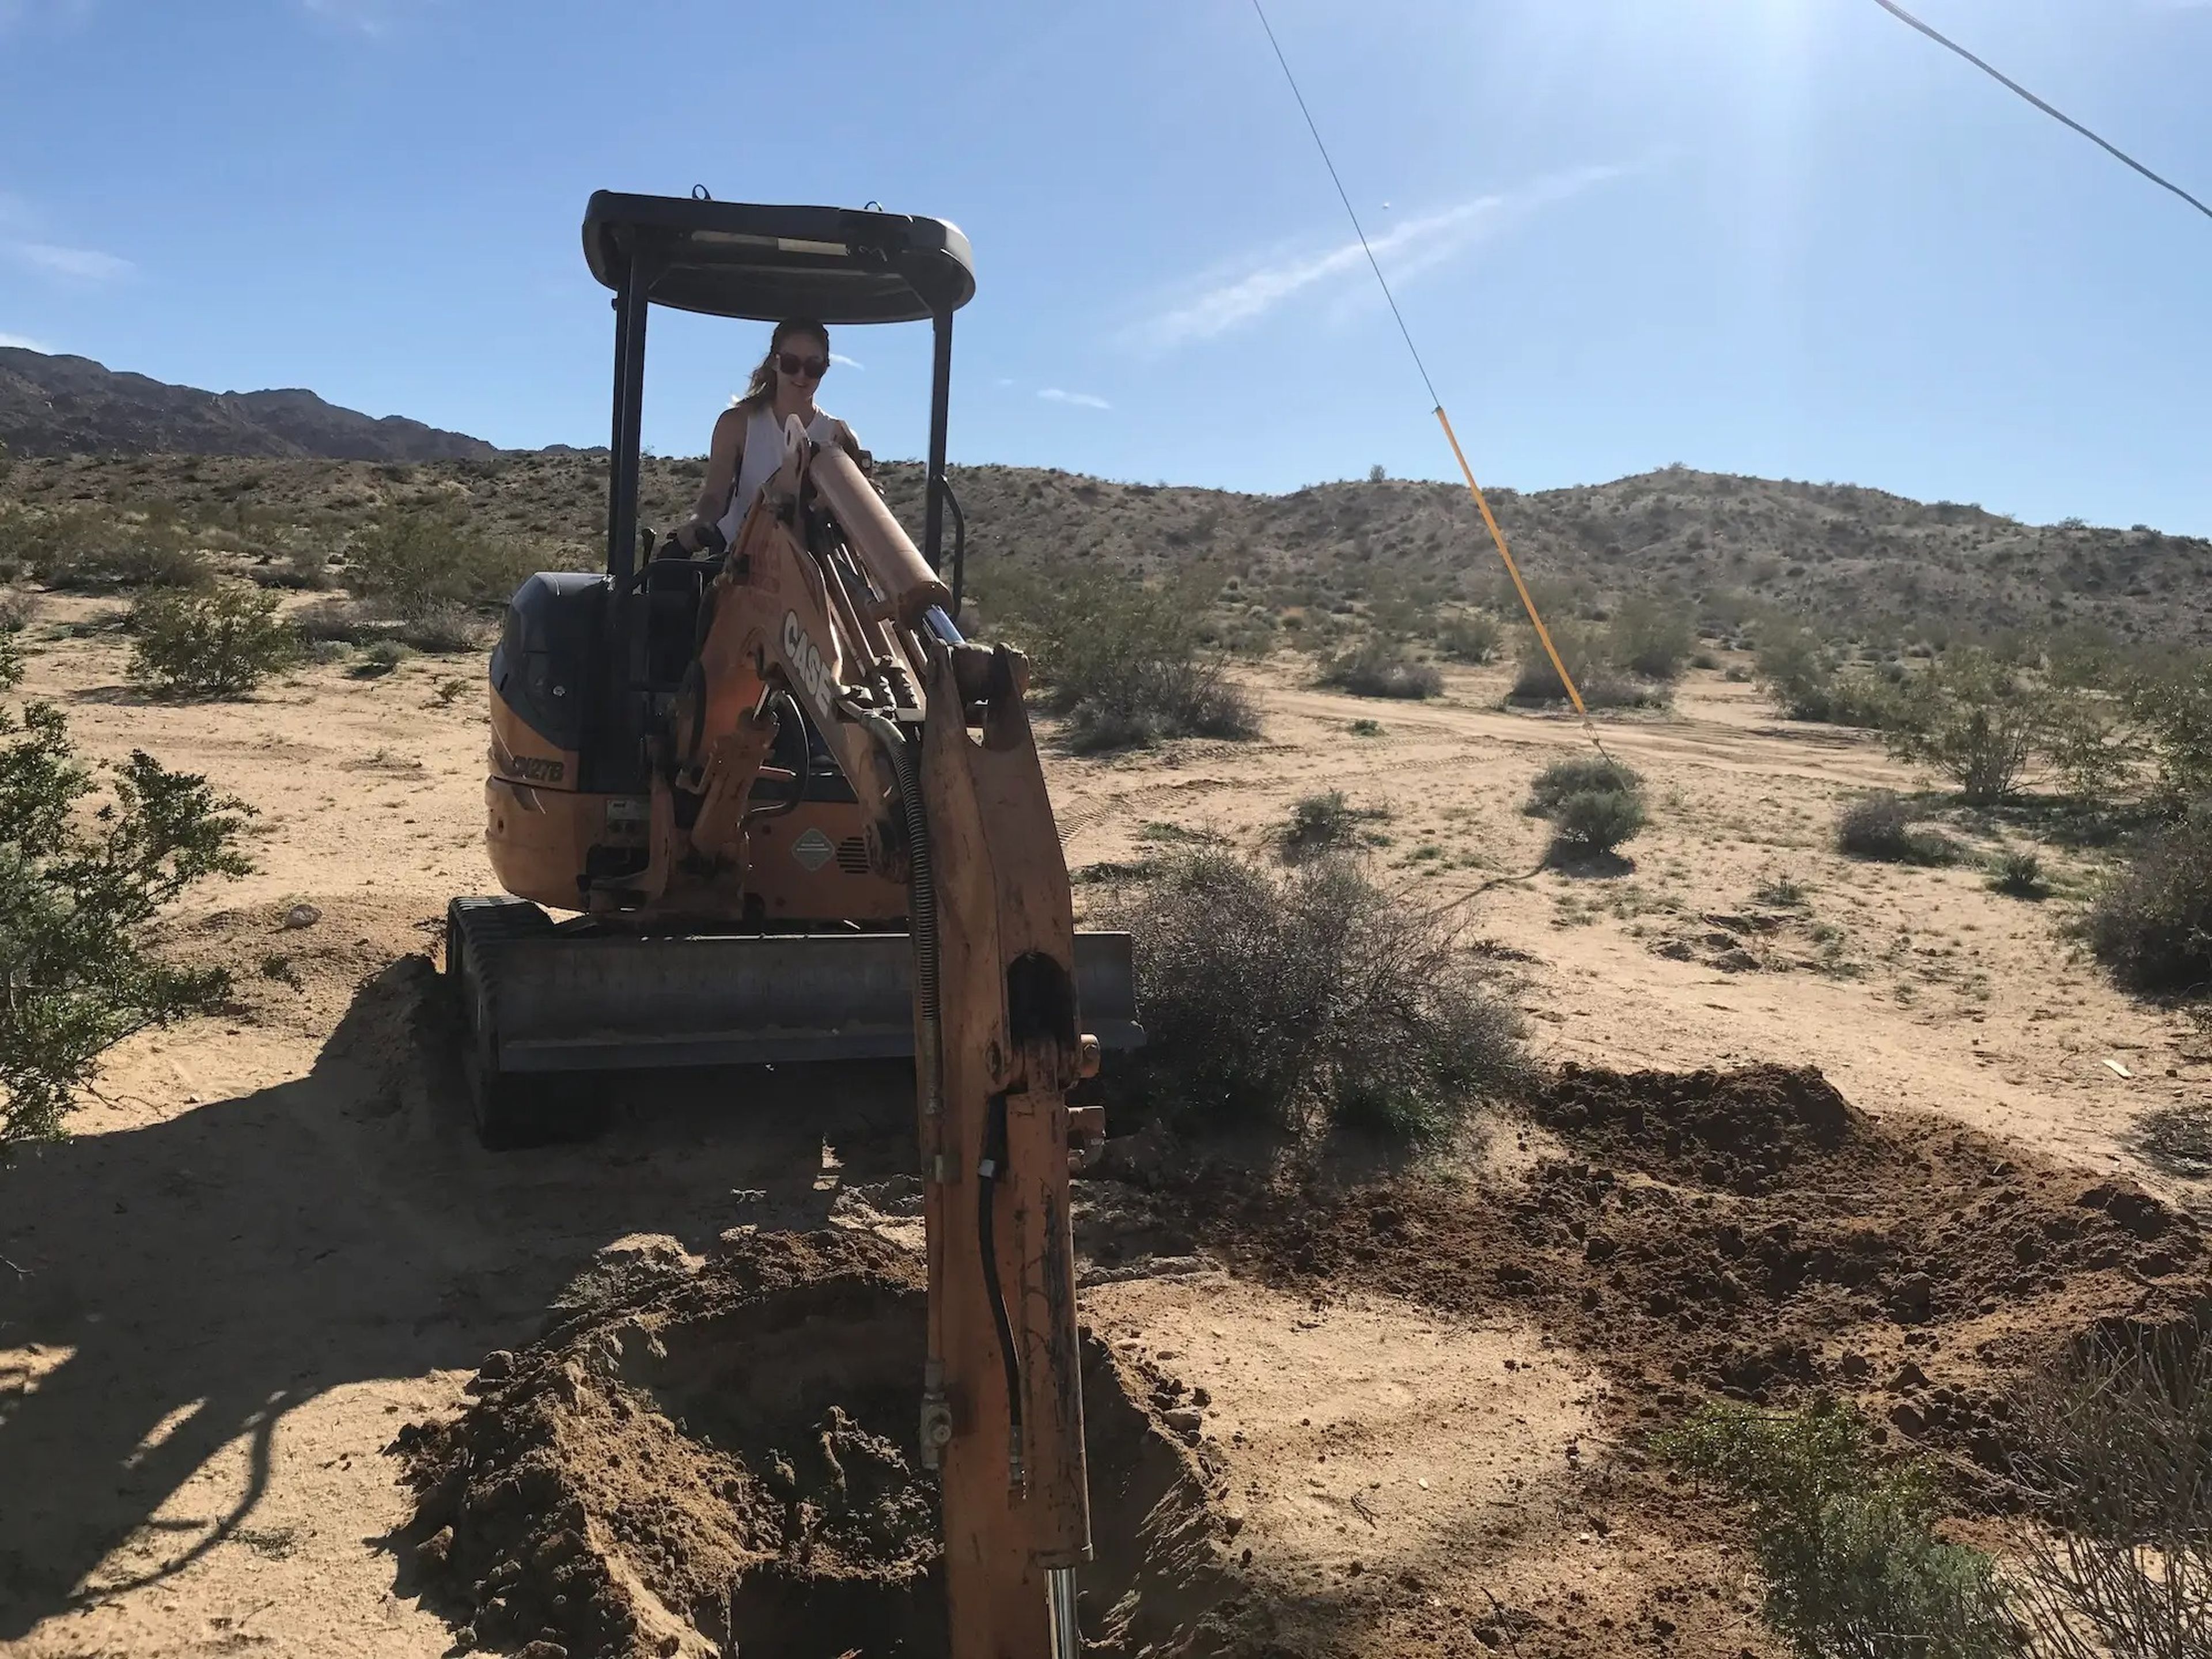 Hillary Flur operating a small bulldozer